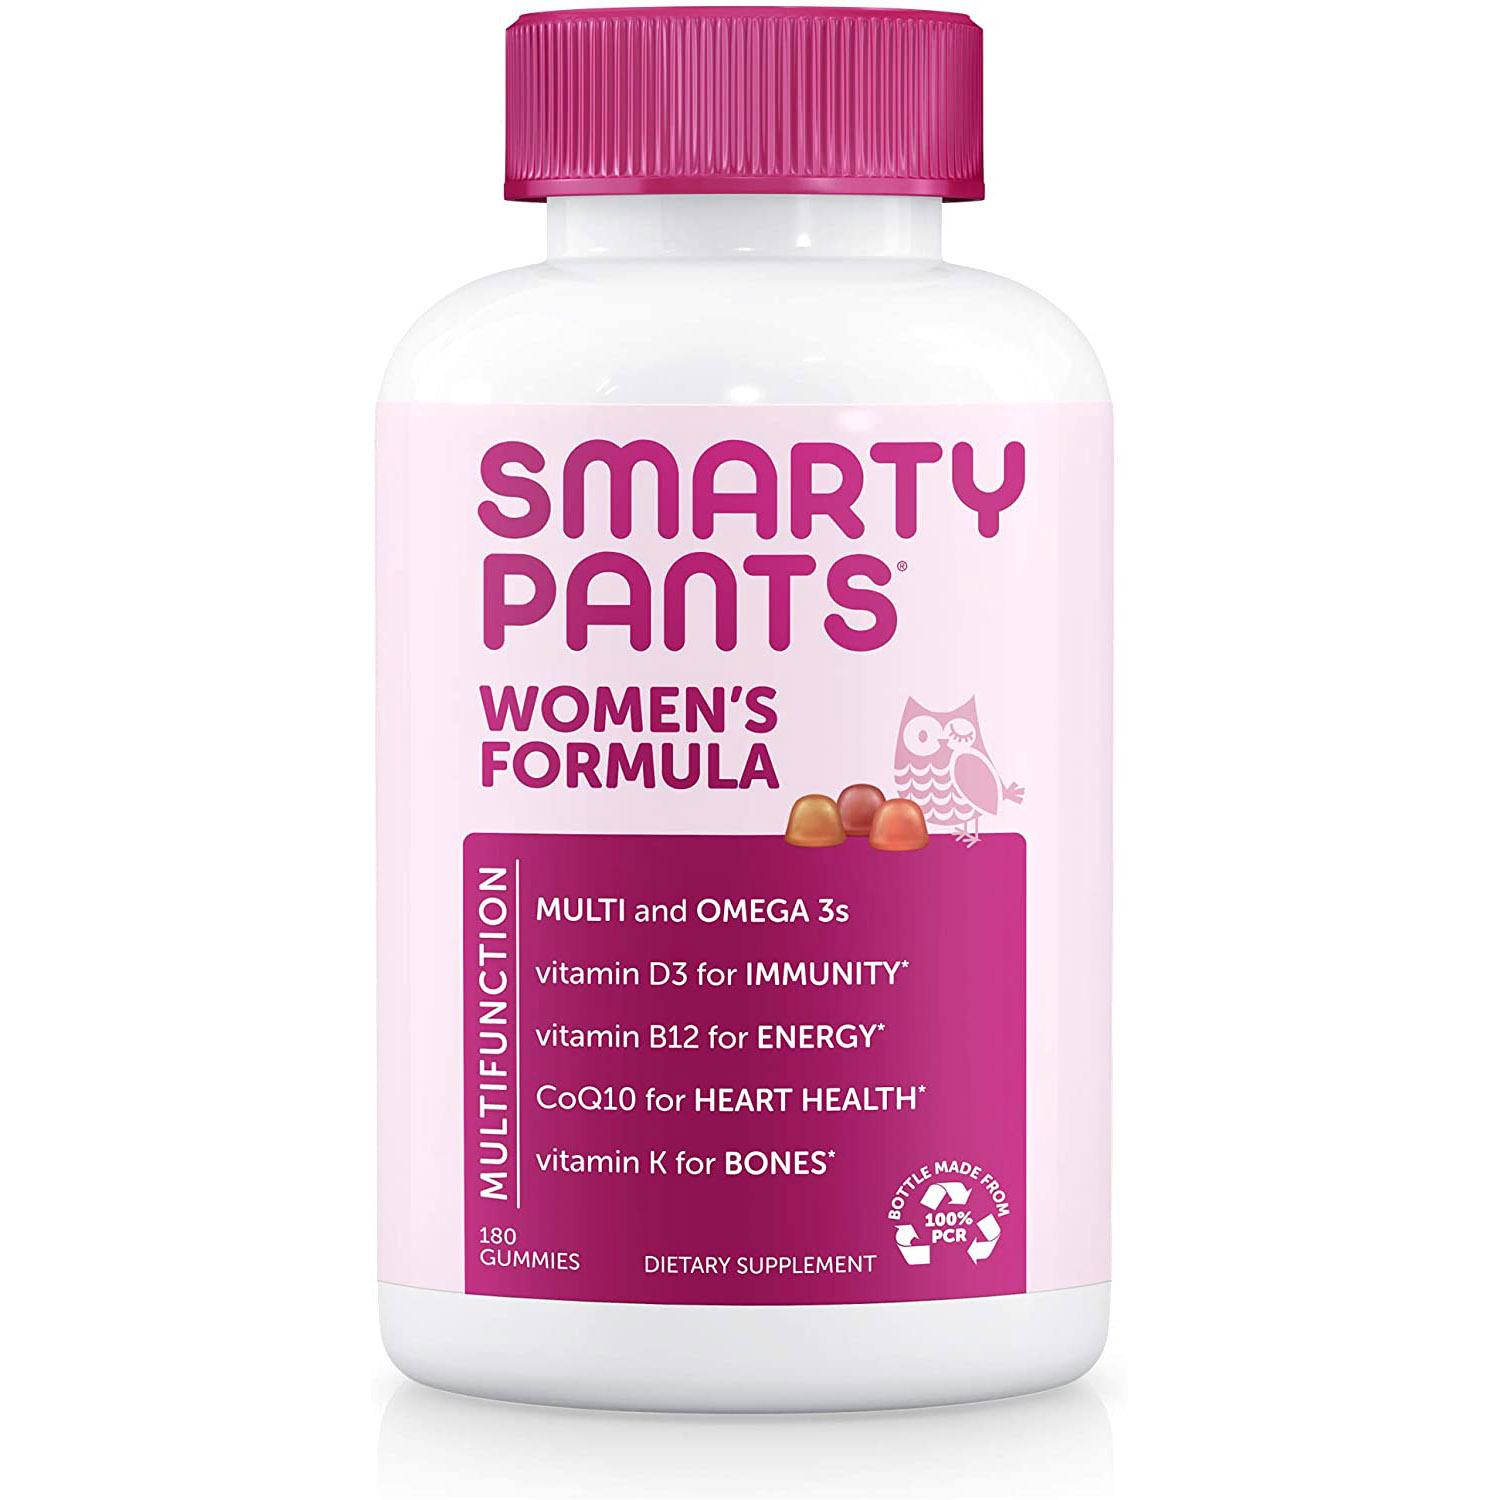 SmartyPants Women's Formula Gummy Vitamins for $15.69 Shipped